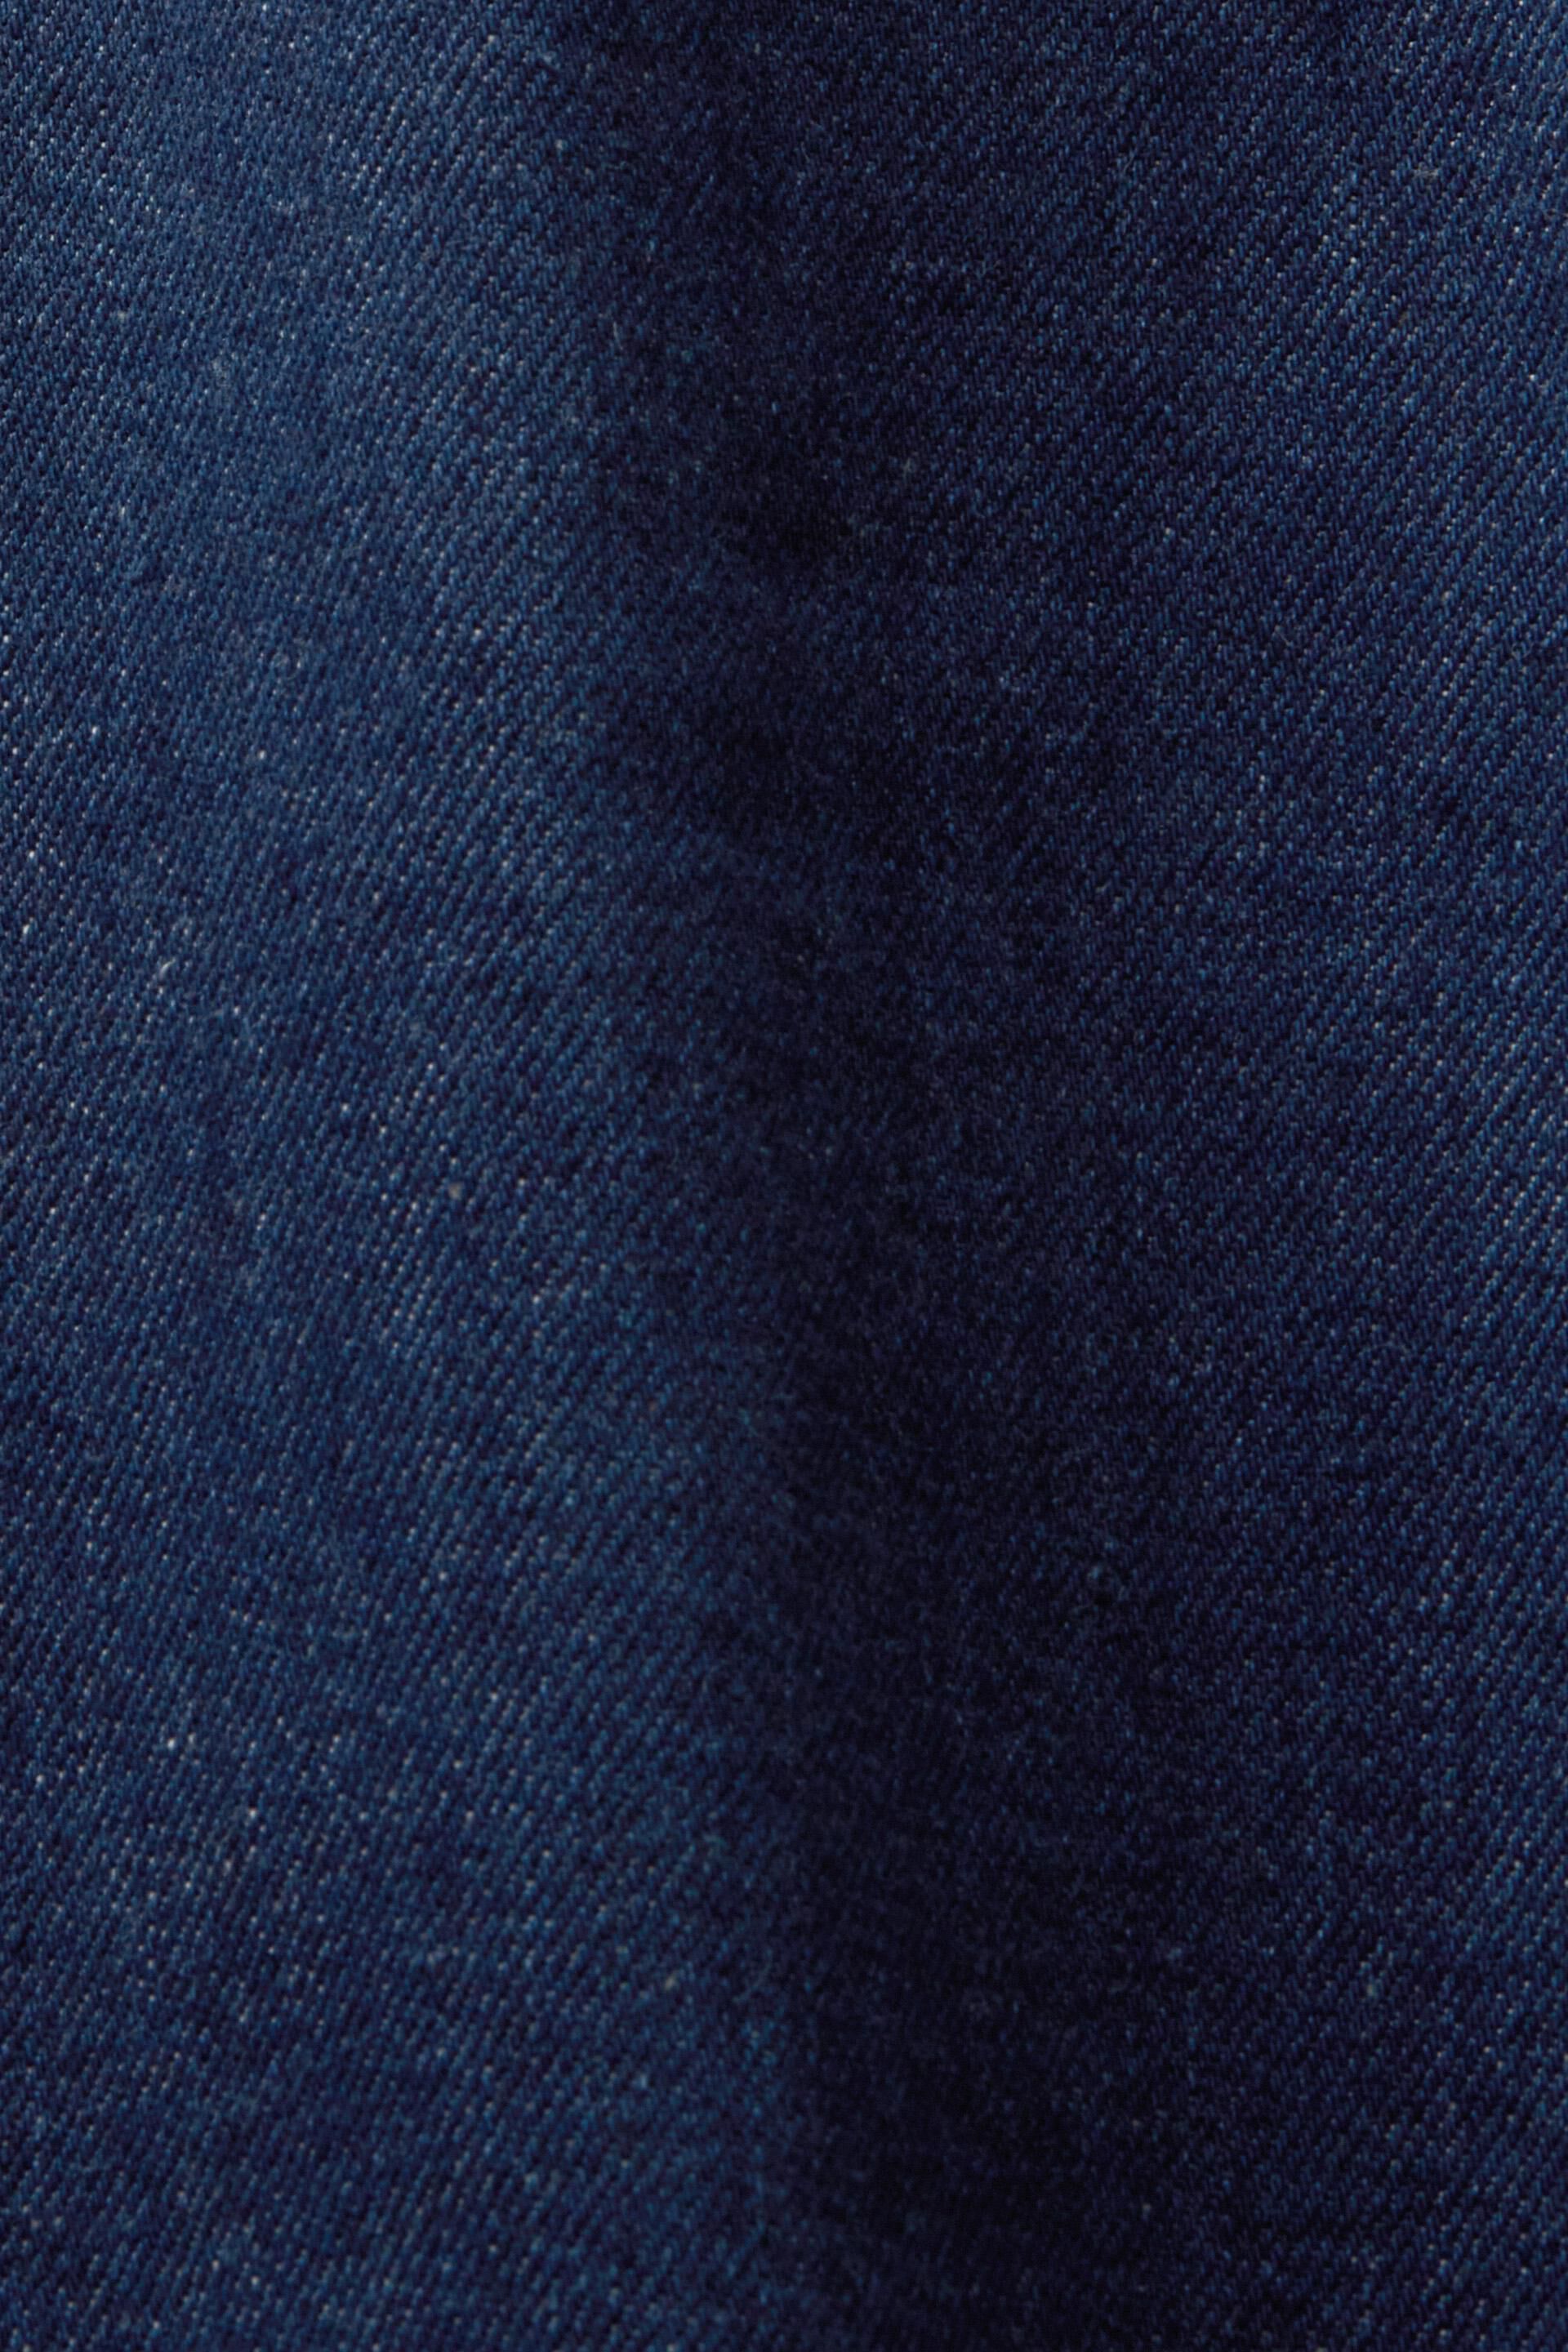 Premium Photo | Blue jeans fabric. denim jeans texture or denim jeans  background.